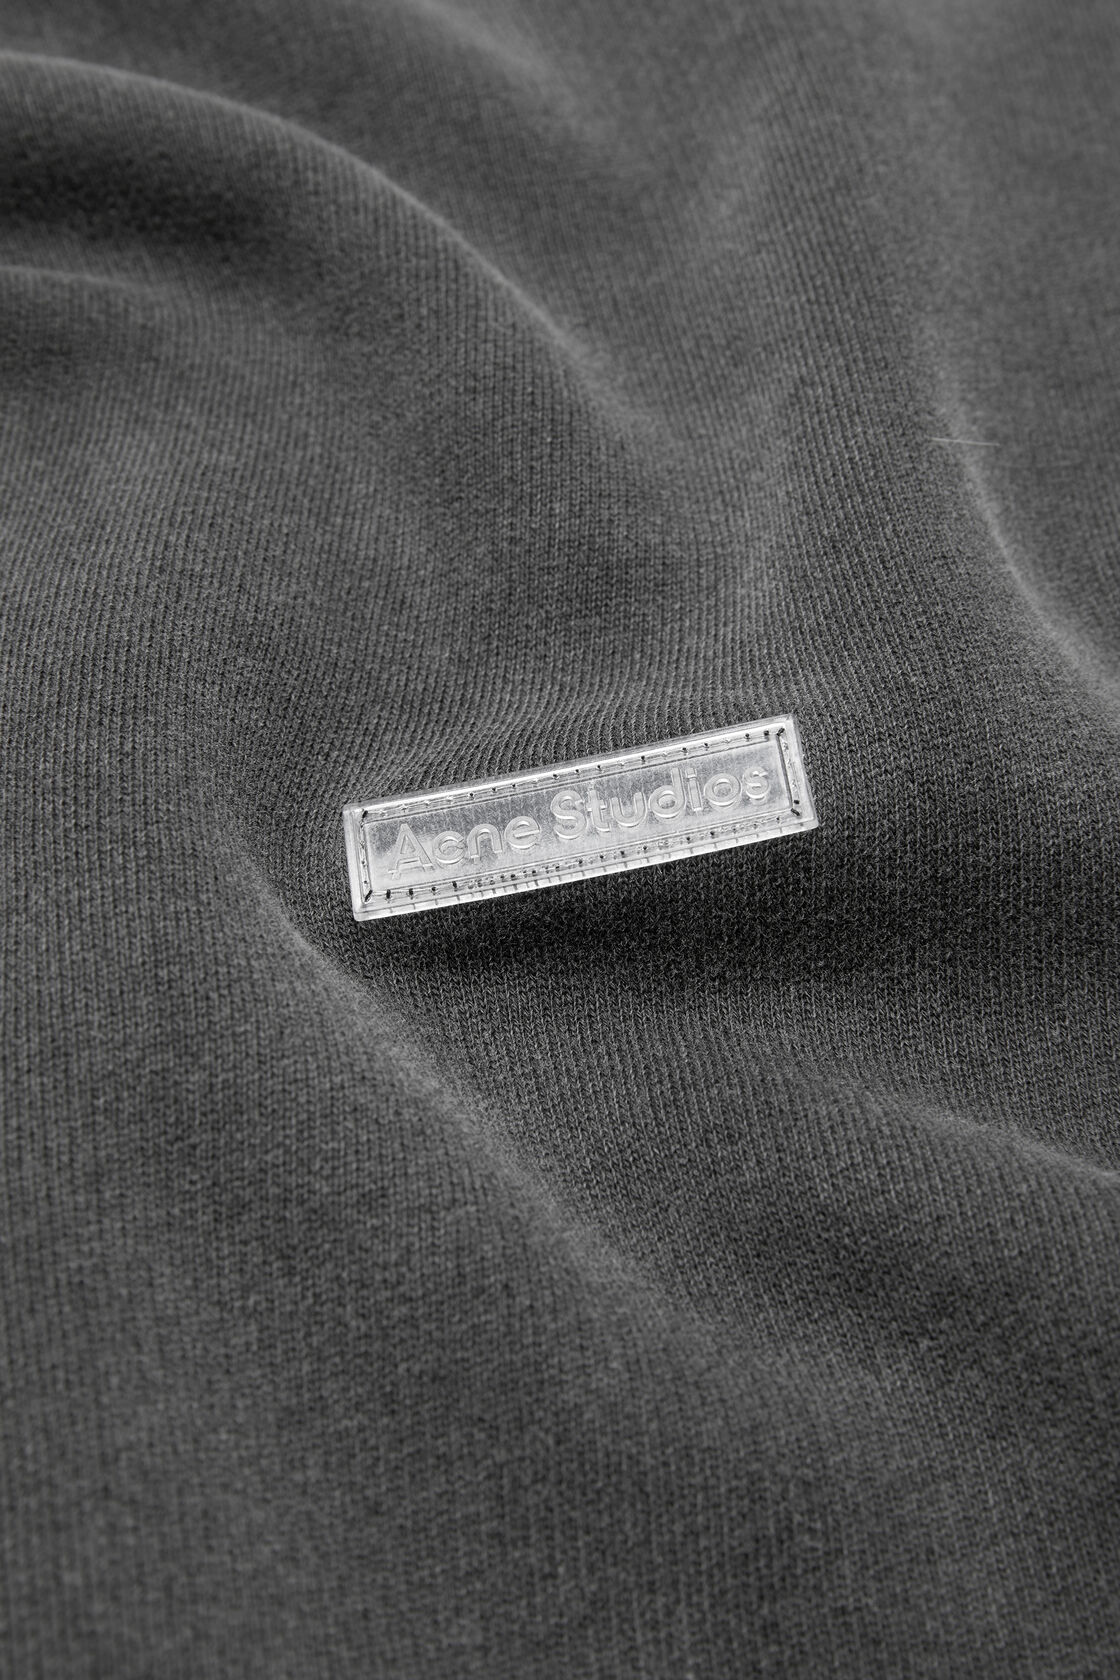 ACNE STUDIOS Vintage Sweatshirt in Faded Black L